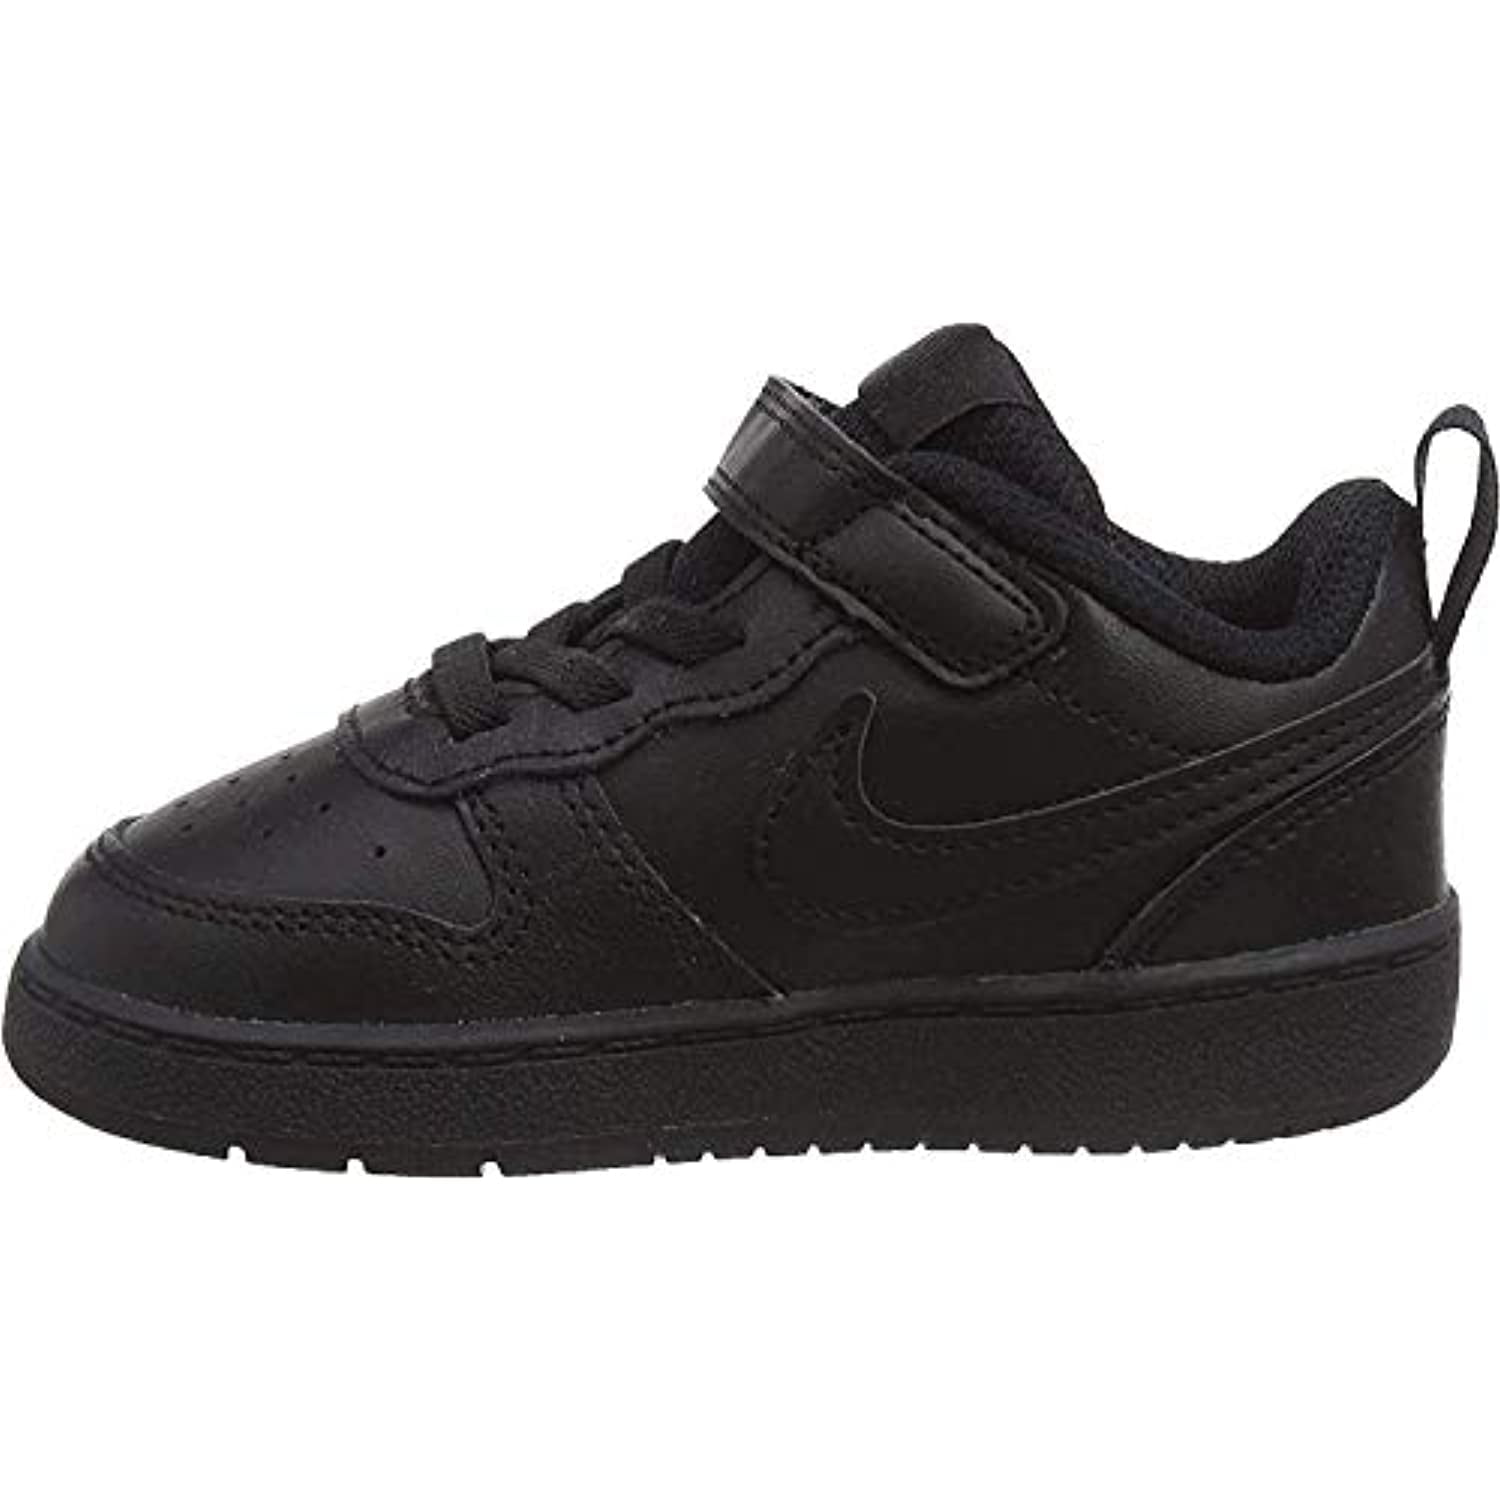 Nike Court Borough (TDV) Size Low Bq5453-001 Toddler Black/Black/Black 2 9